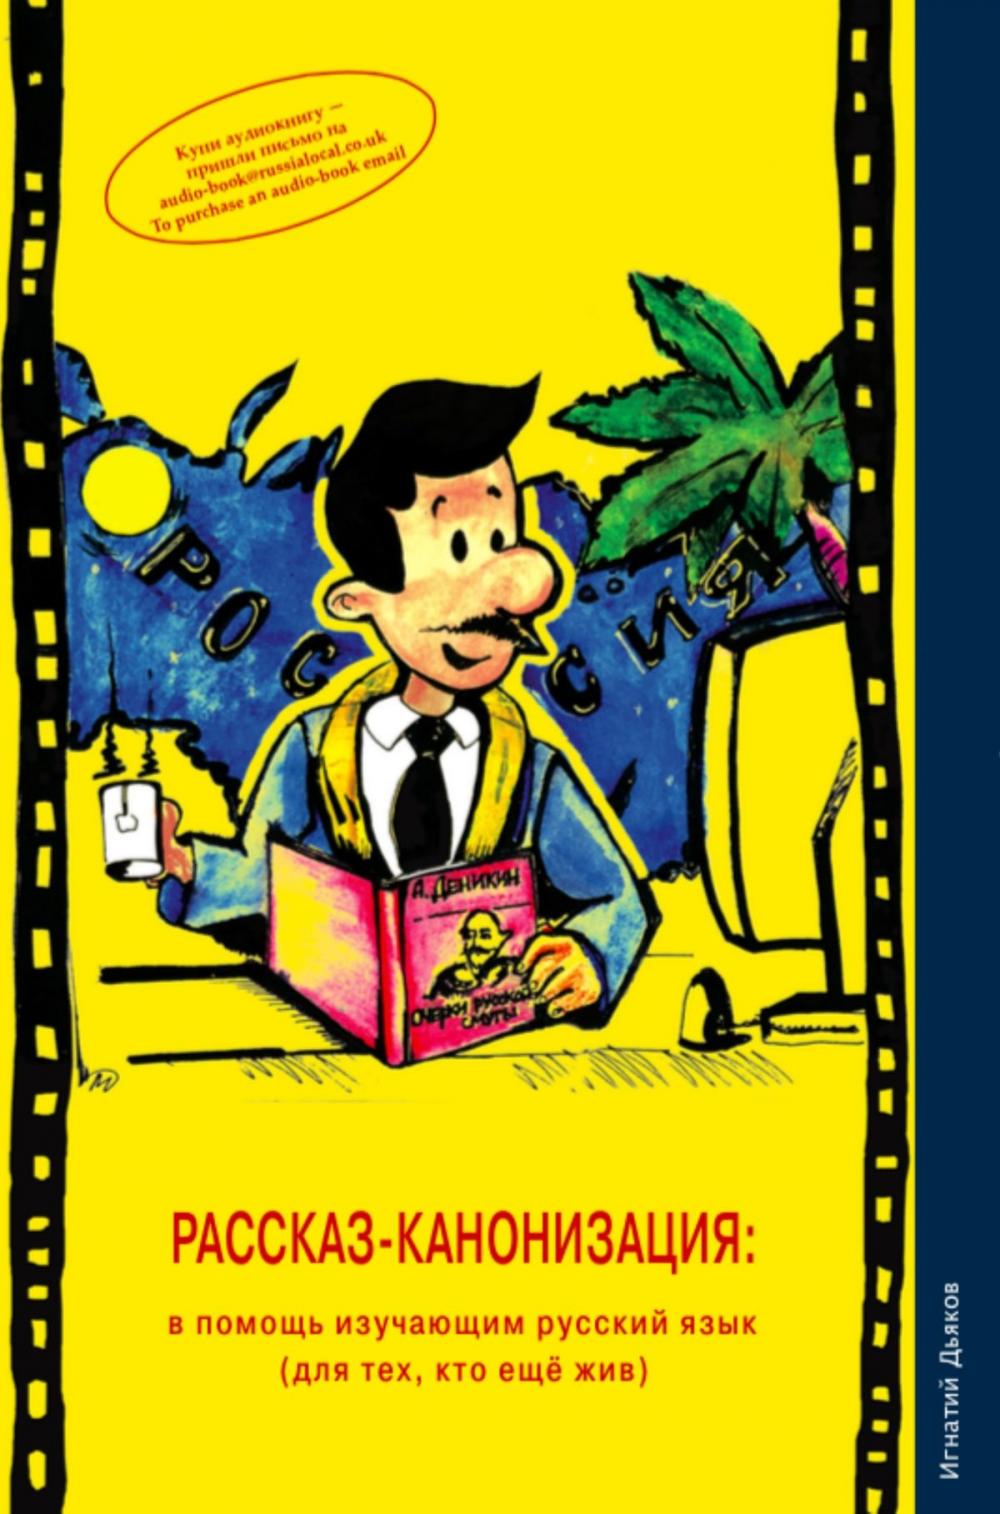 Big bigCover of Rasskaz-kanonizatsiya (The Story Canonisation): unconventional Russian language textbook / Russian reader